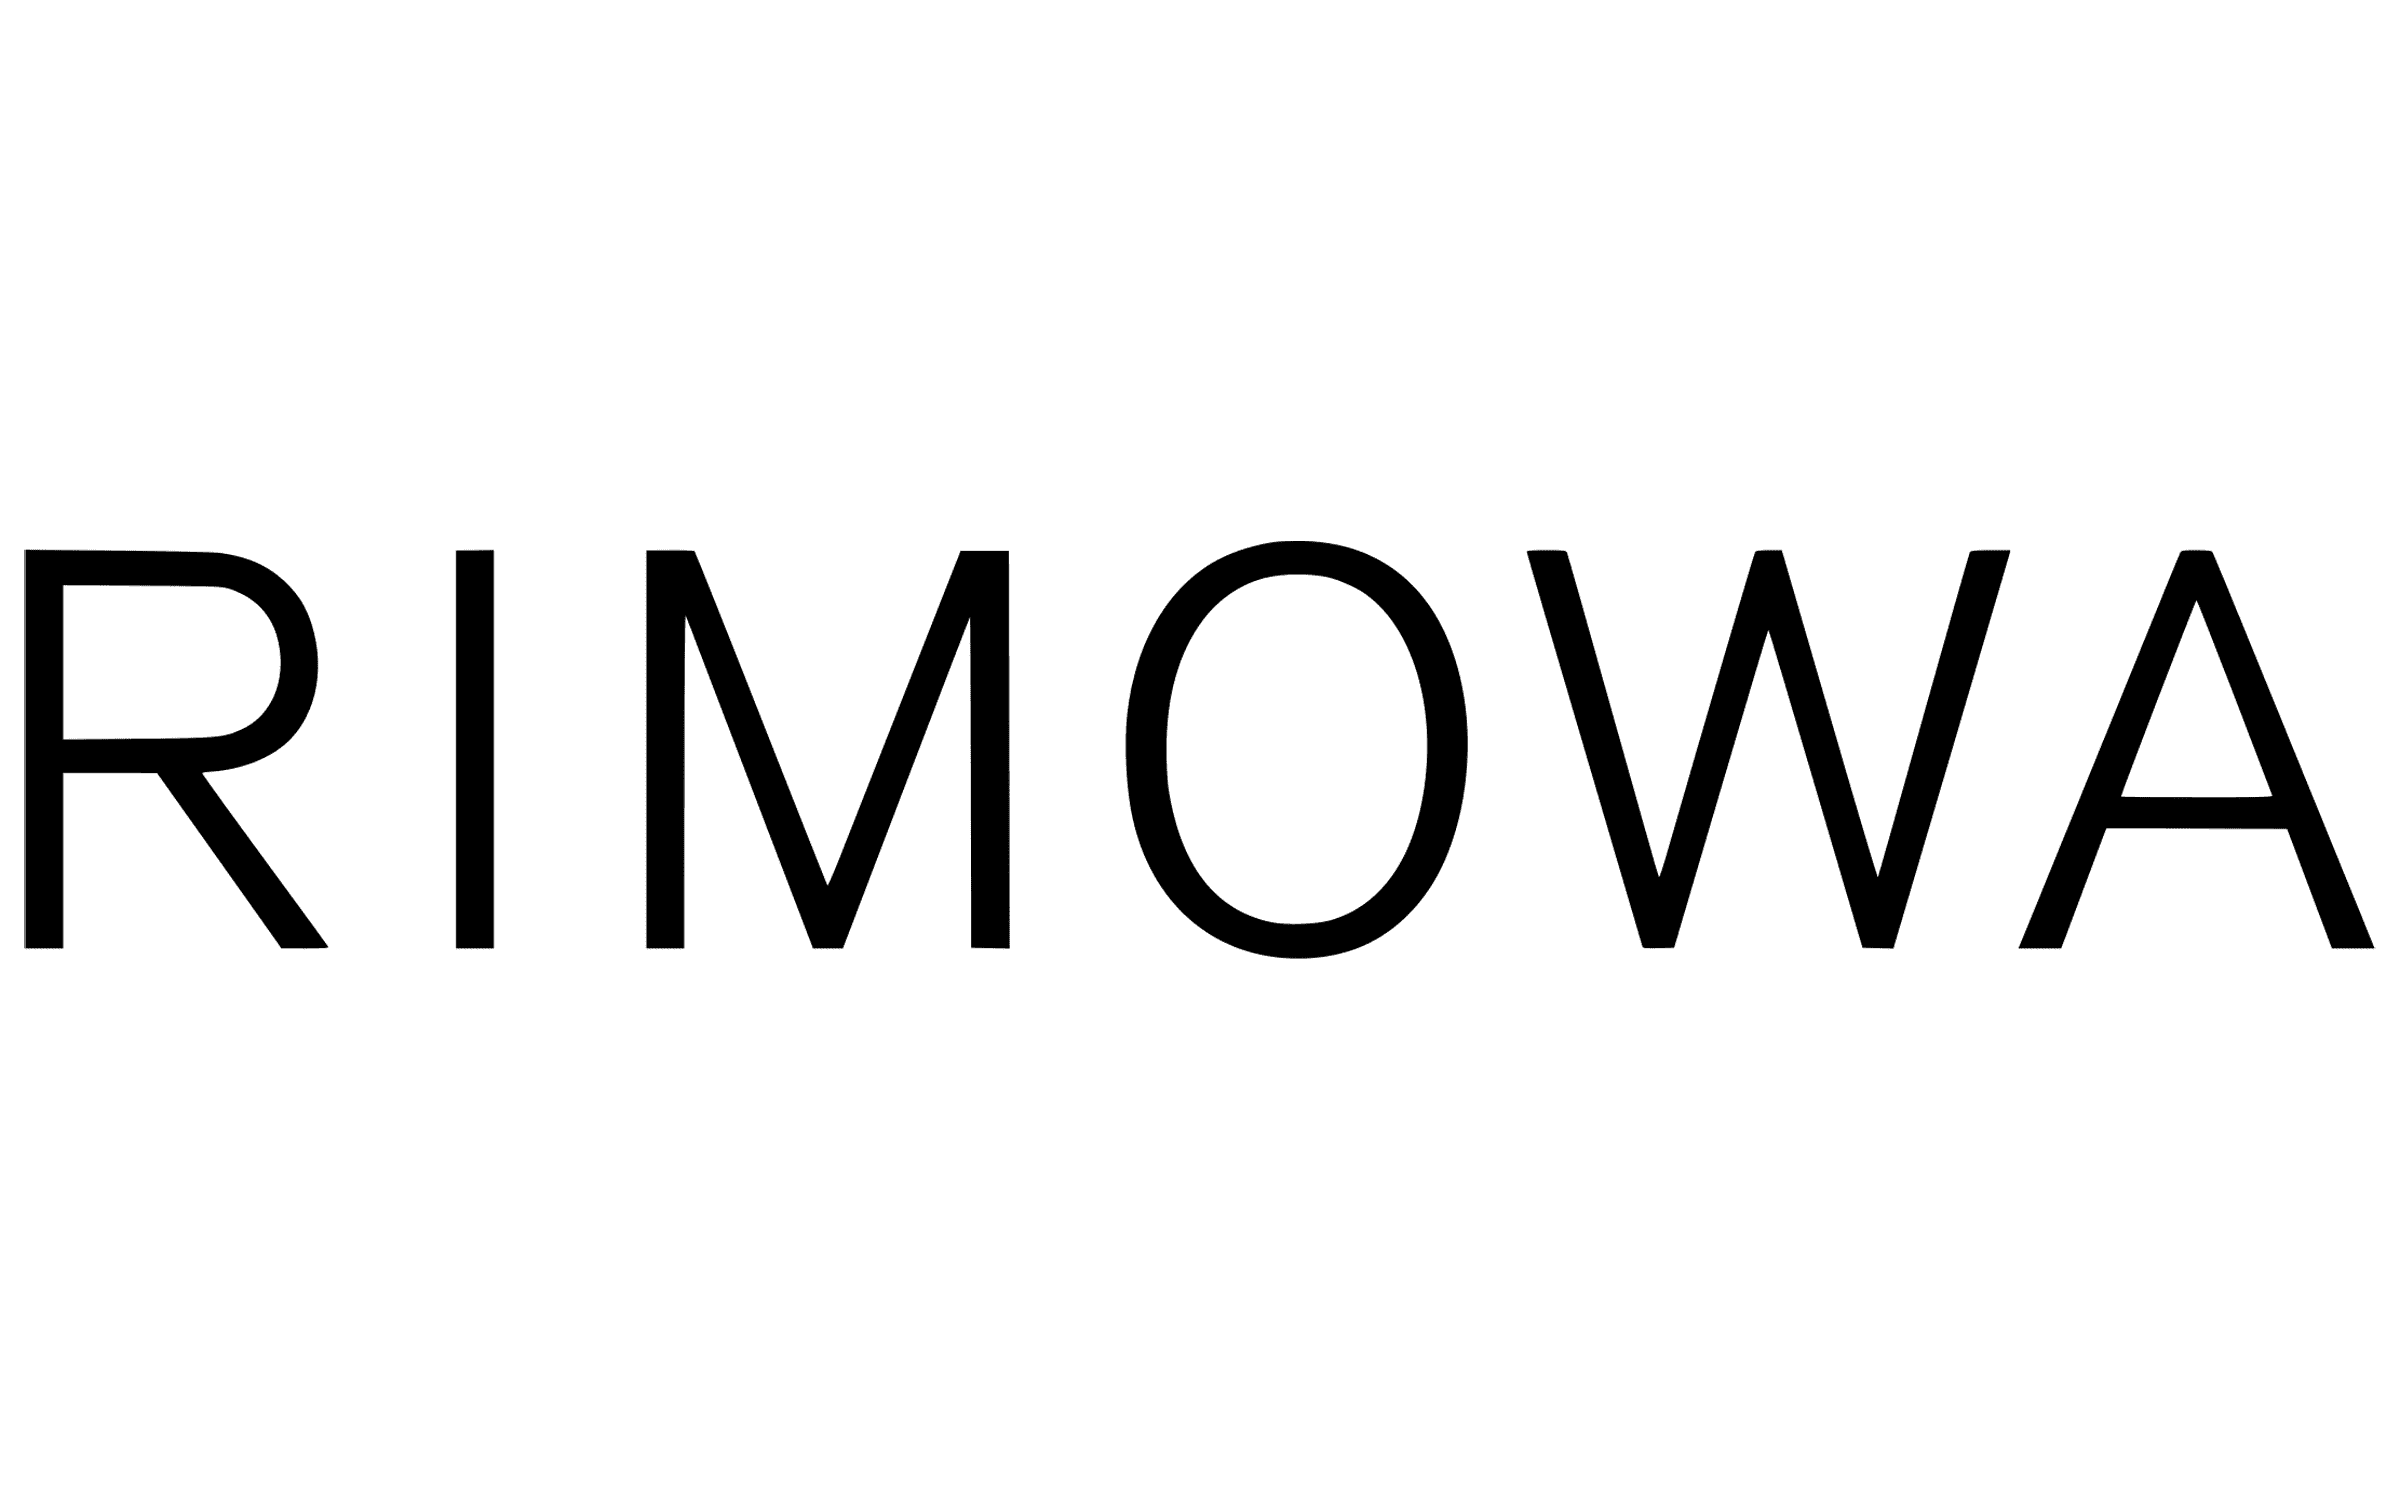 RIMOWA, An Alphabet